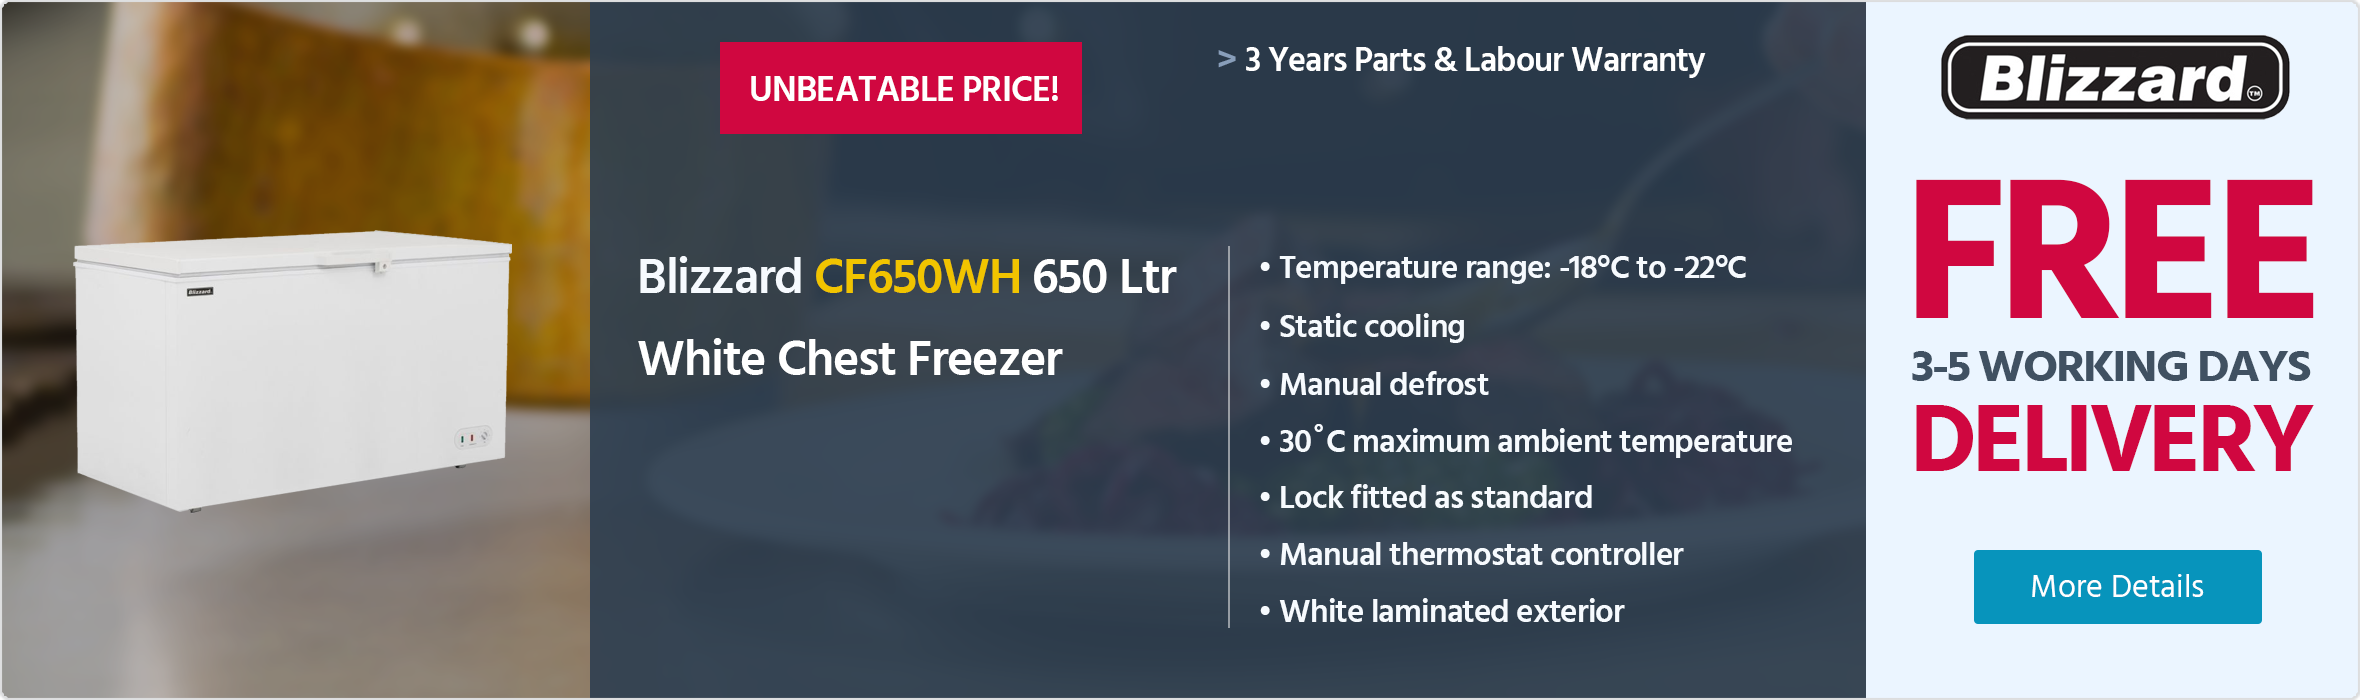 Blizzard CF650WH 650 Ltr White Chest Freezer